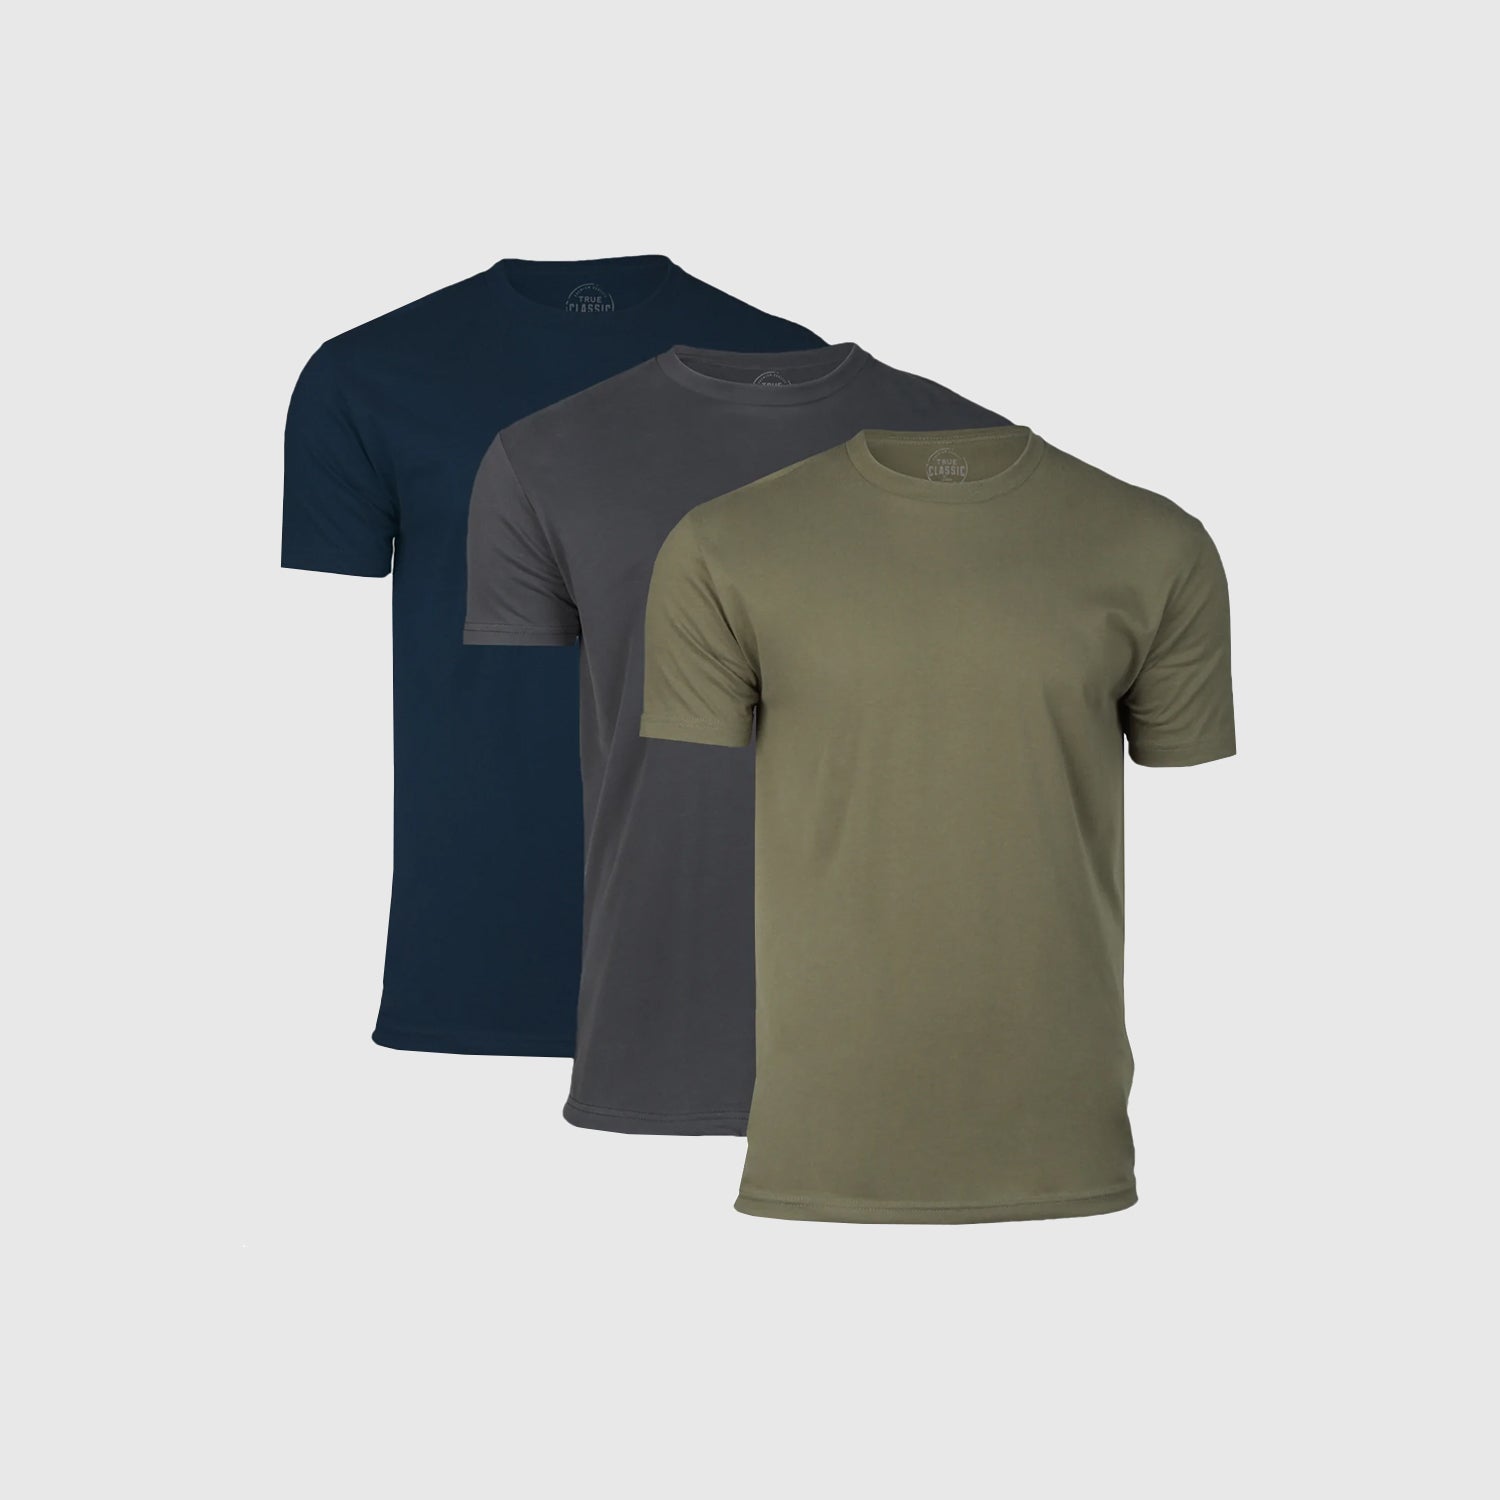 AARMY // lululemon Classic-Fit Cotton Blend T-Shirt